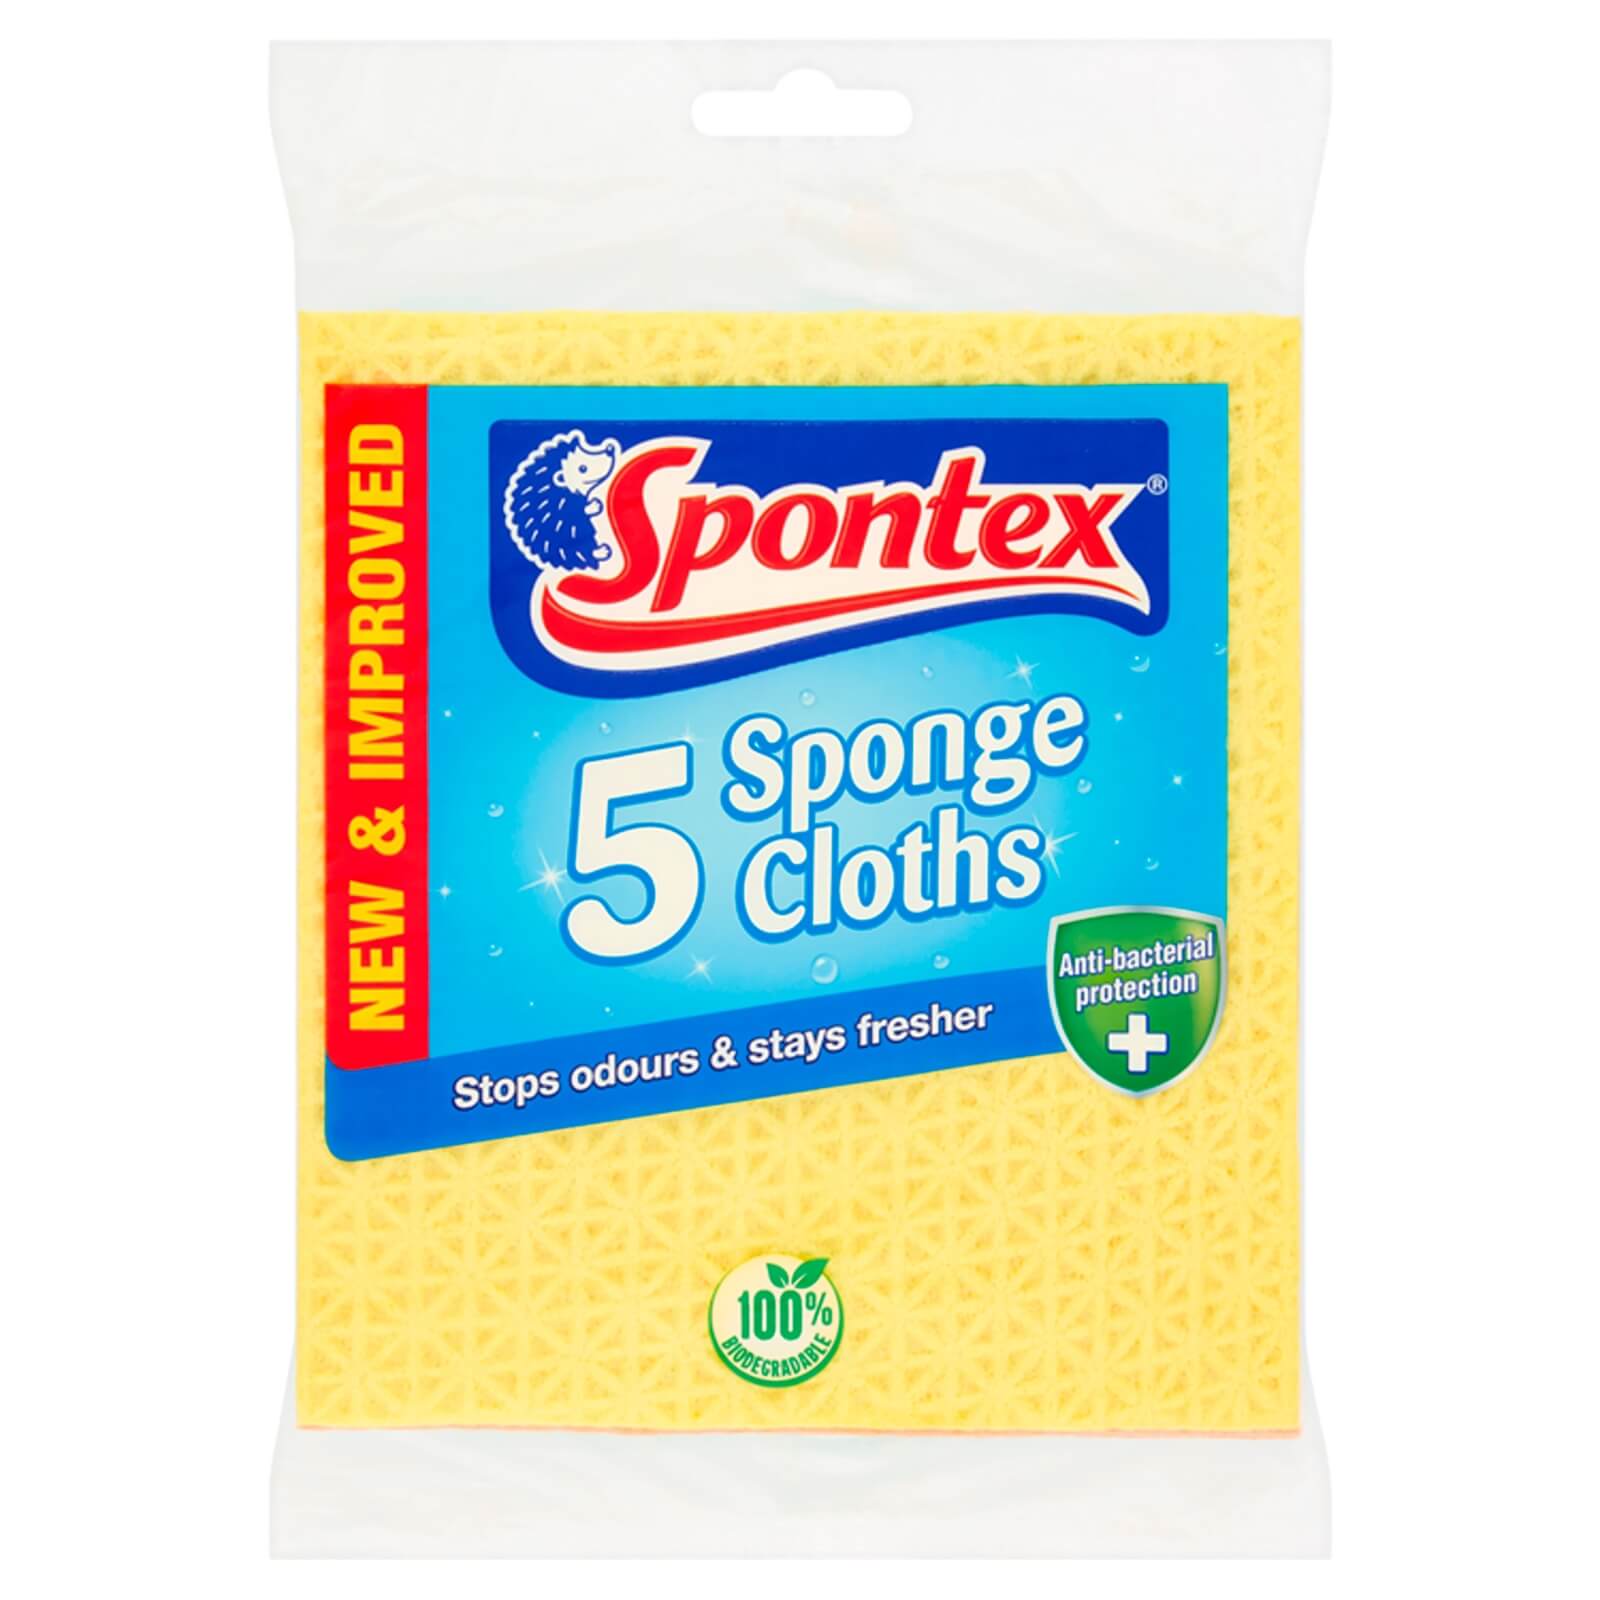 Spontex Sponge Cloth 5 Pack